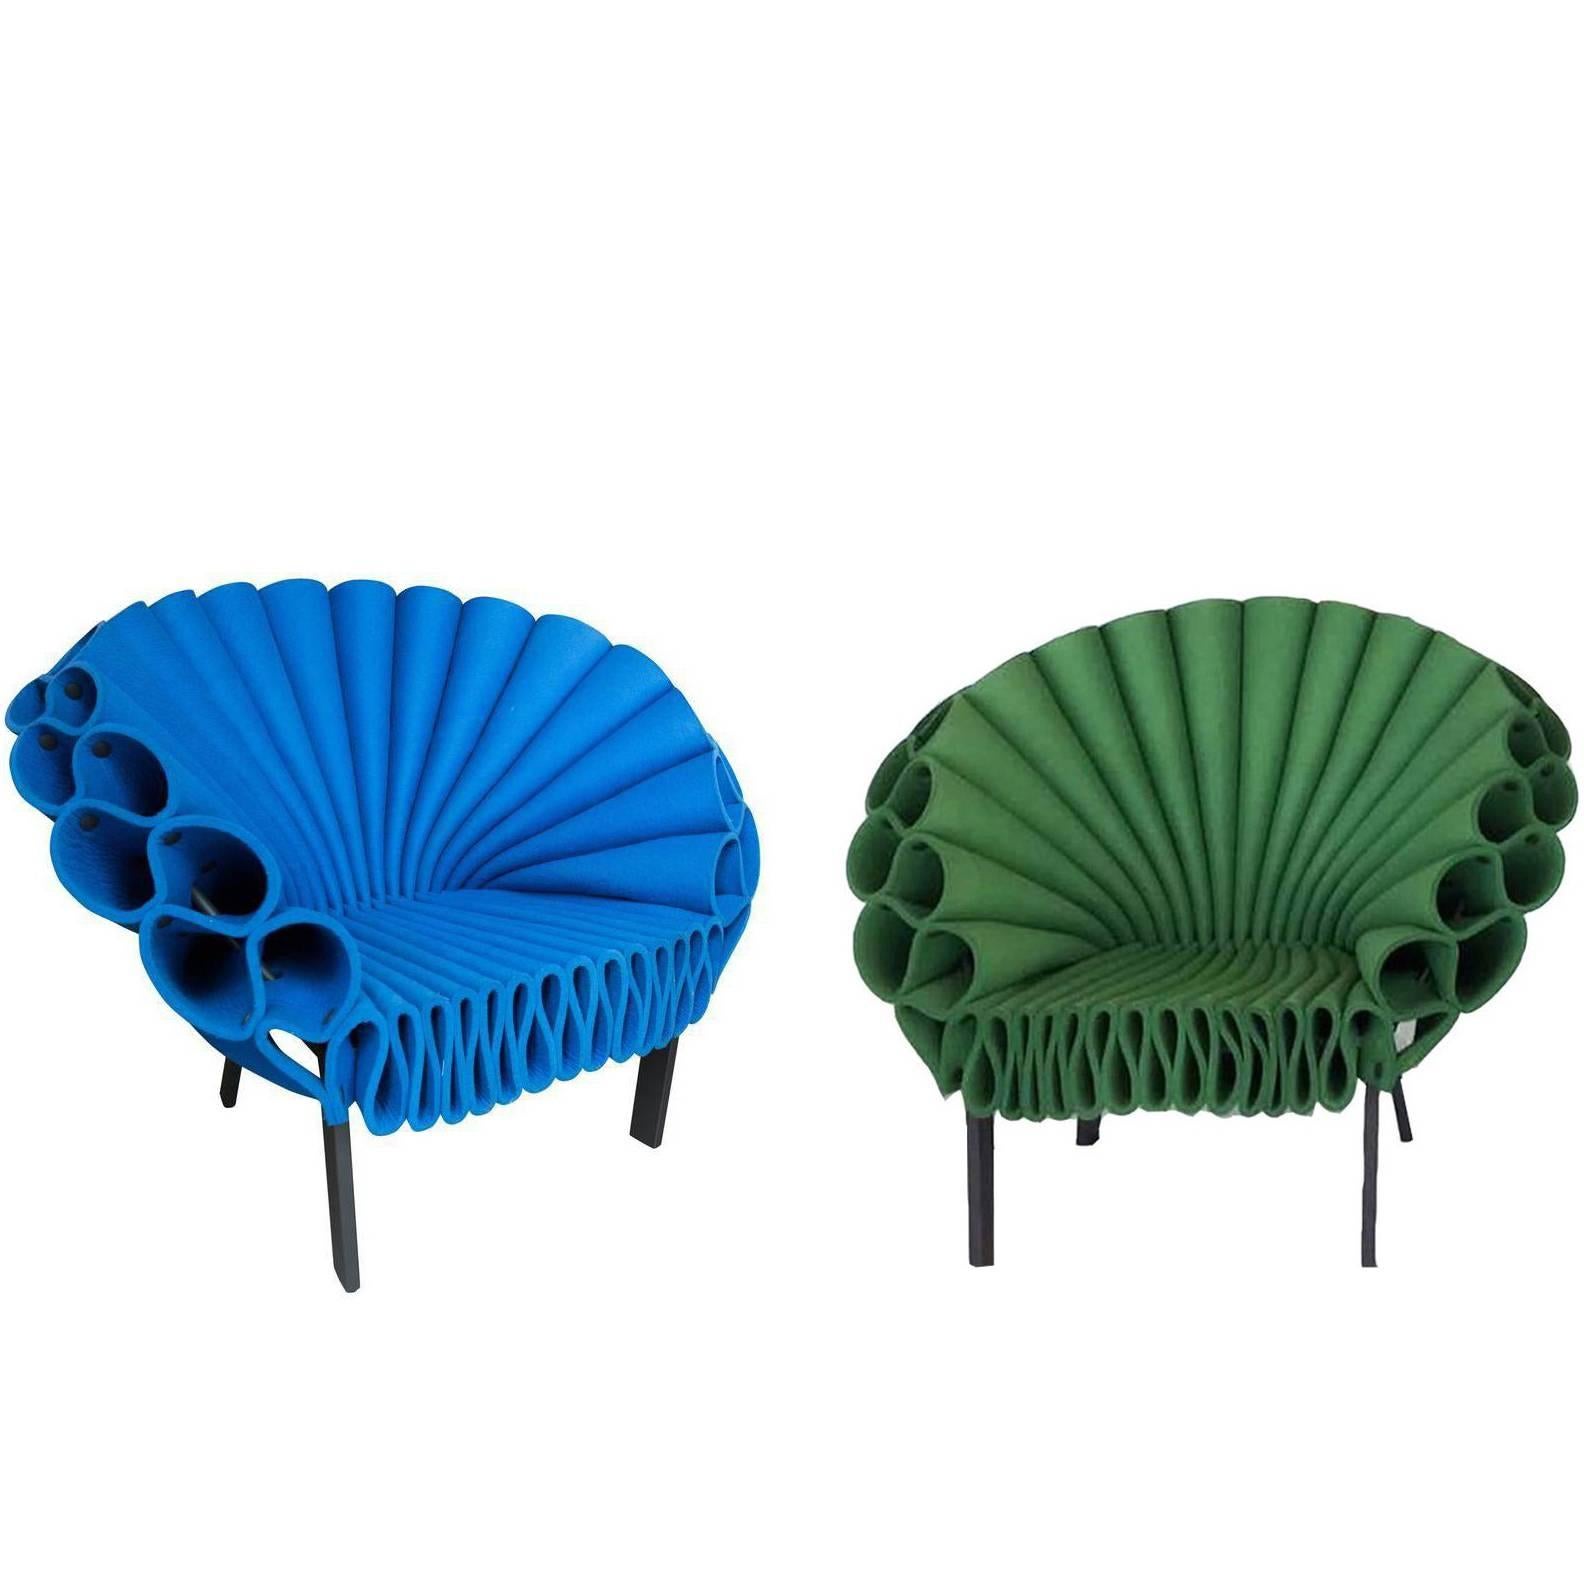 Peacock Chair Designed by Dror Benshetrit for Cappellini